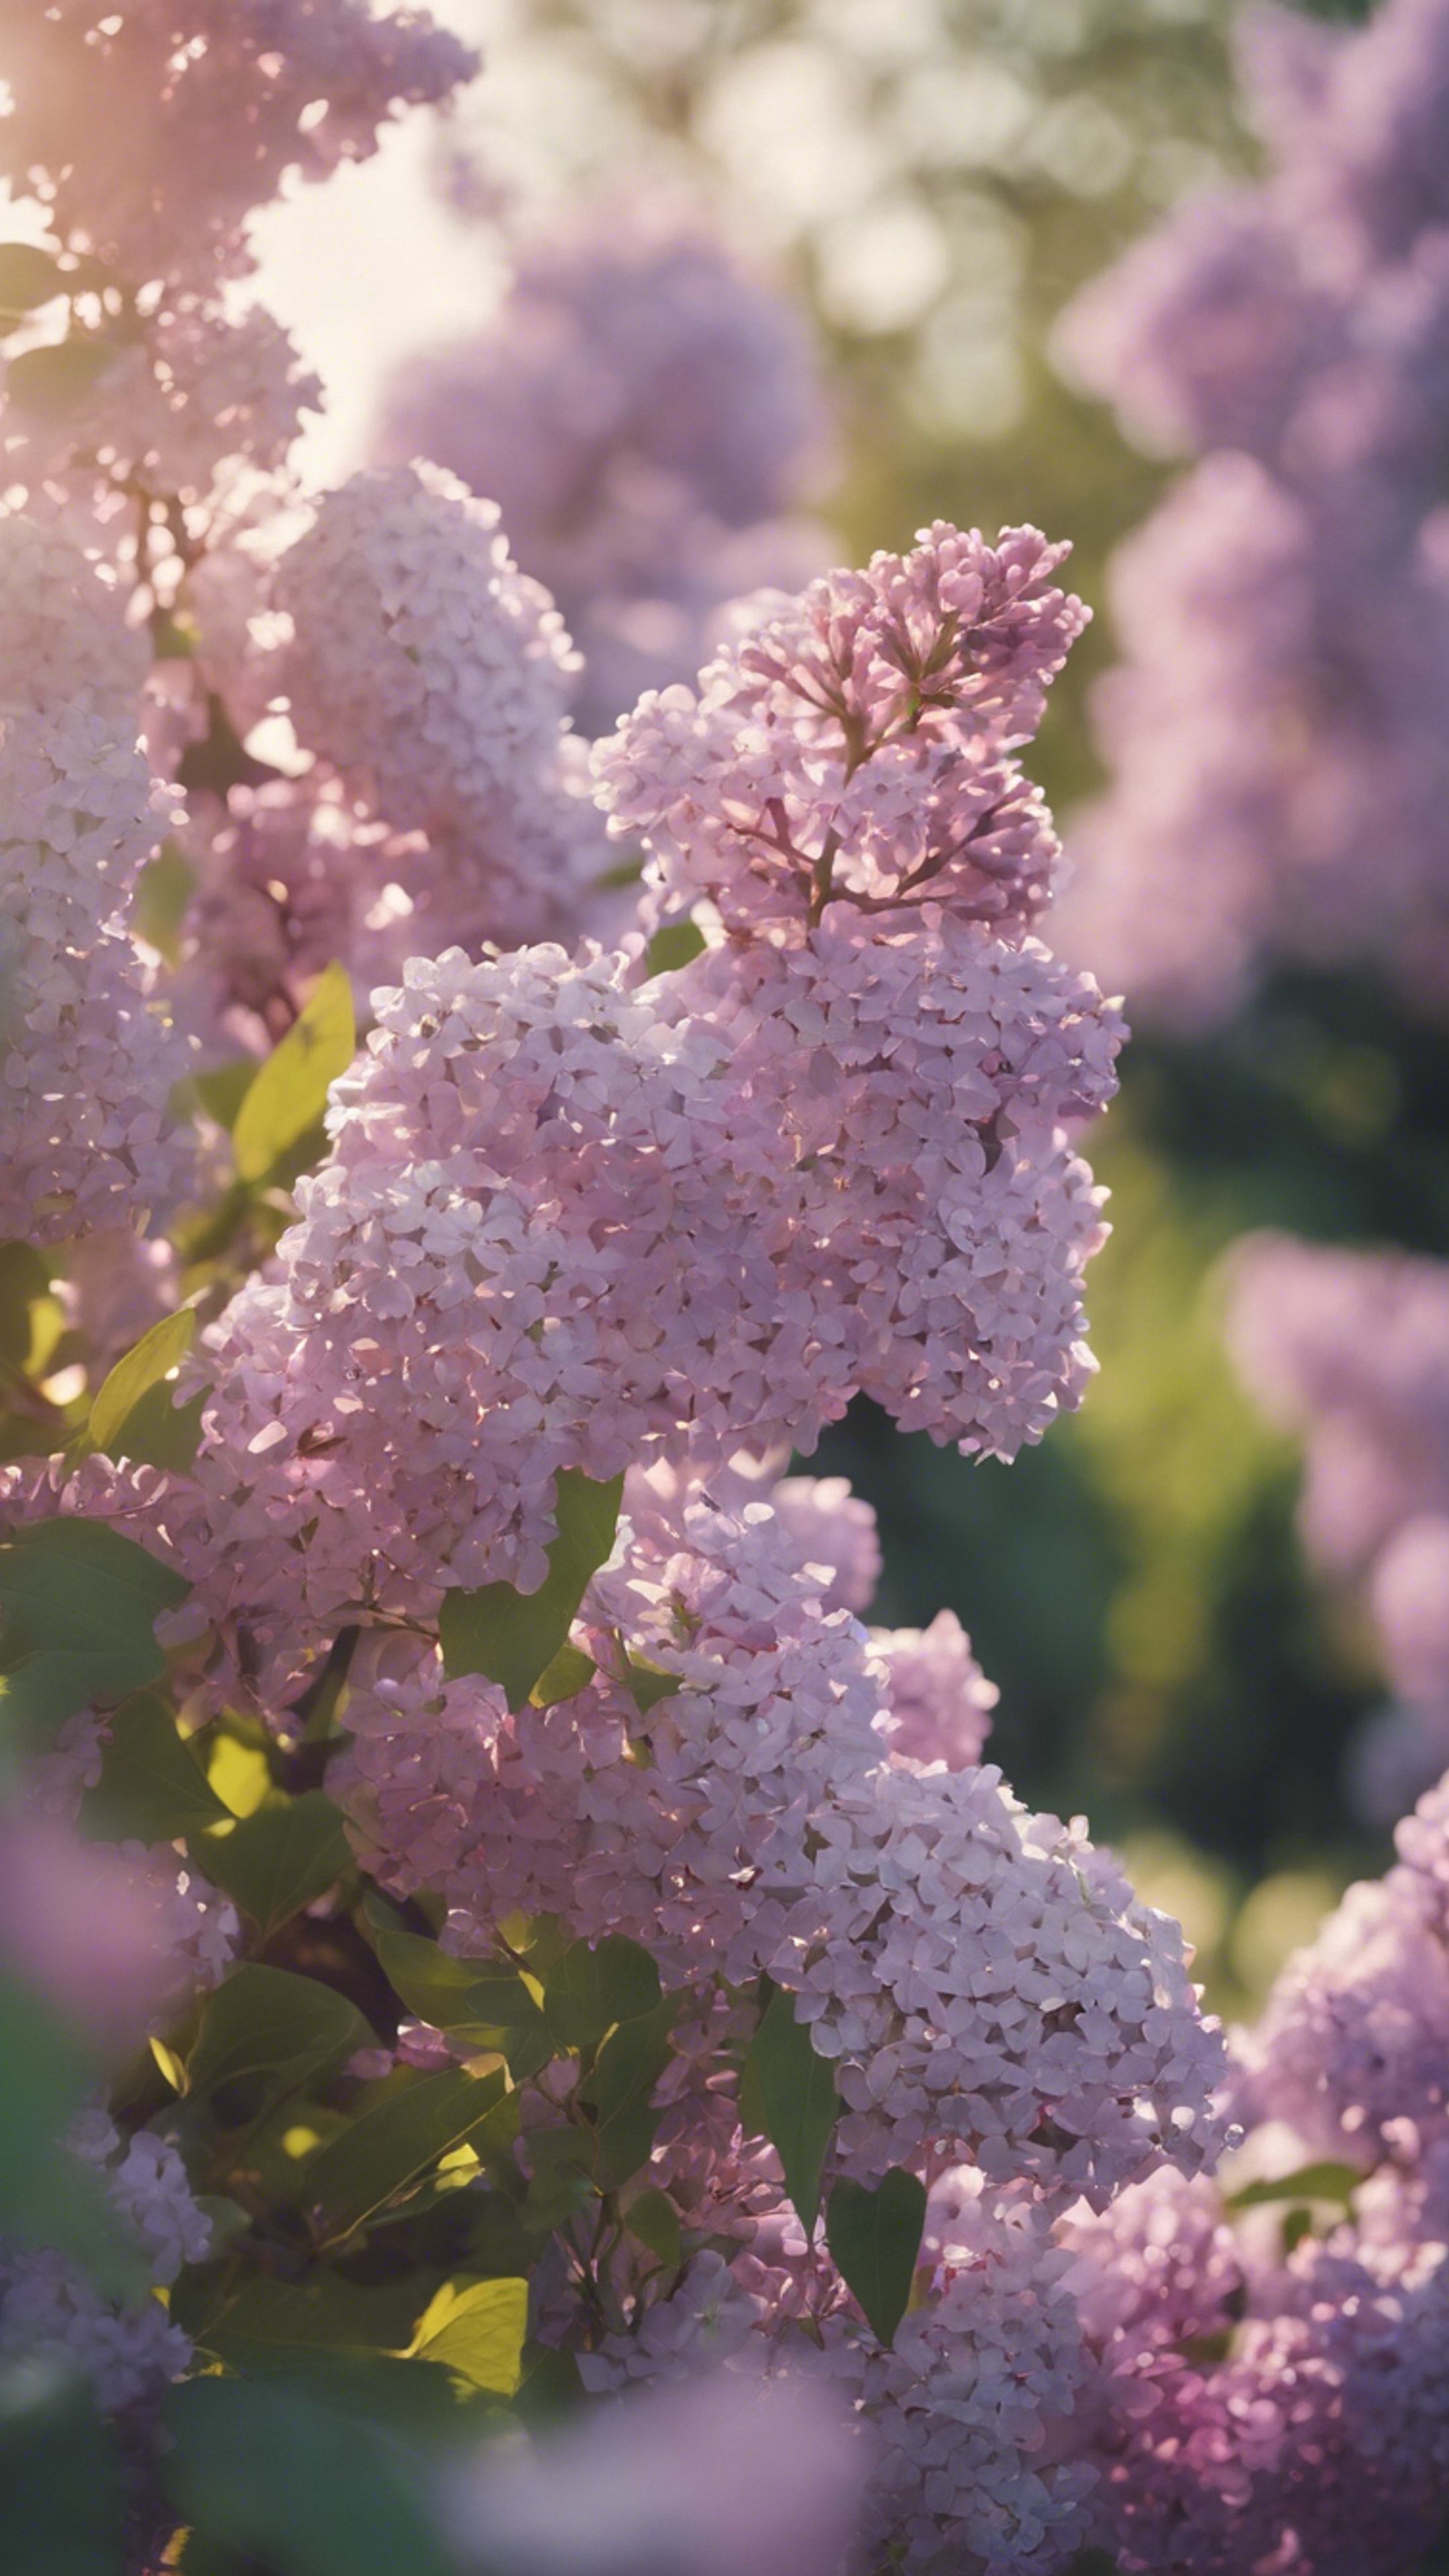 A bountiful garden full of preppy lilac flowers in full bloom under soft sunlight. Behang[535239431e6946dc9128]